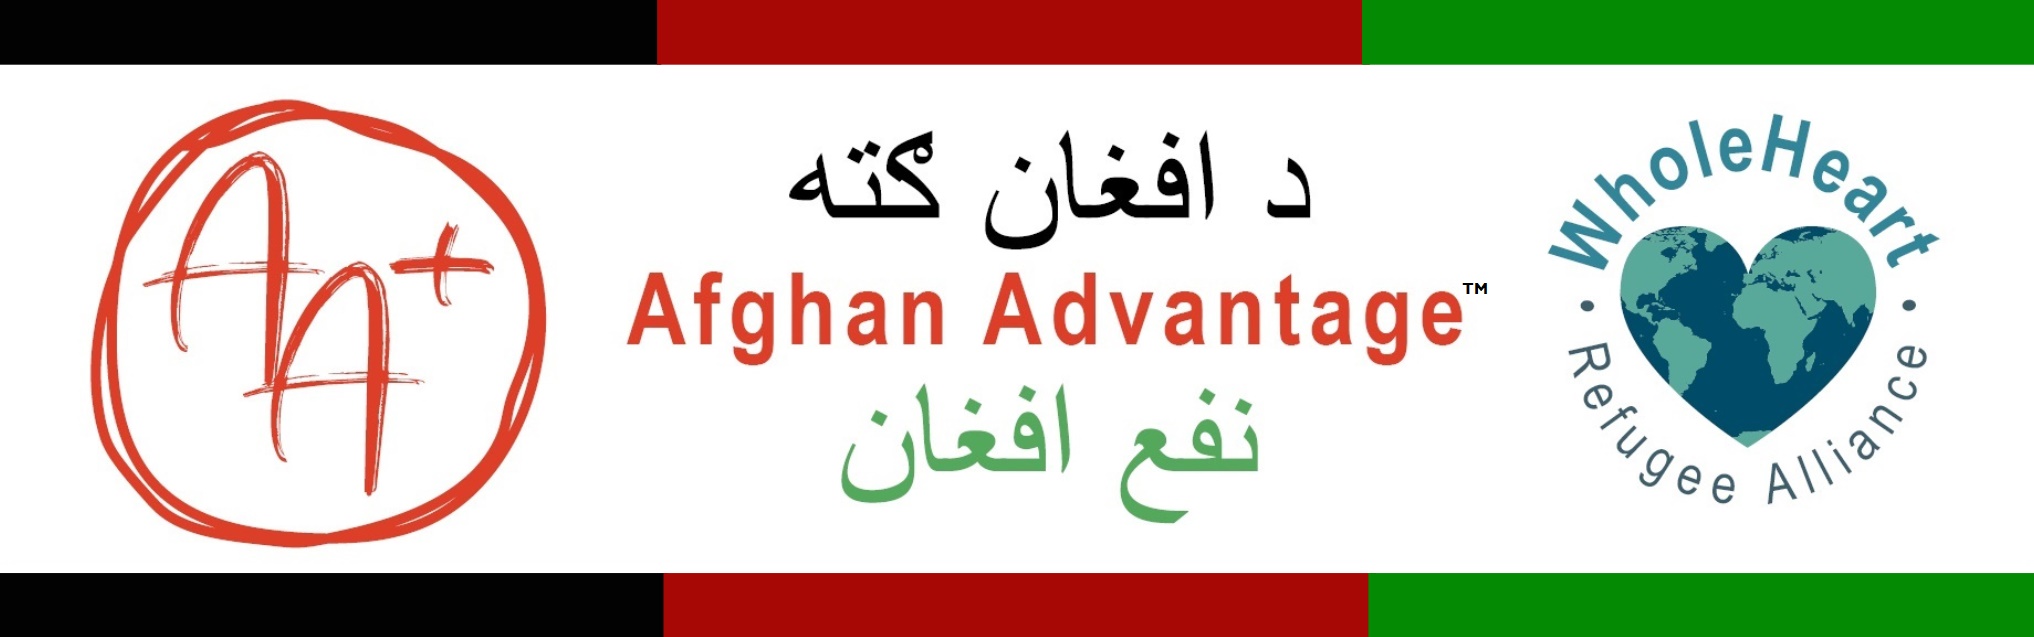 Afghan Advantage